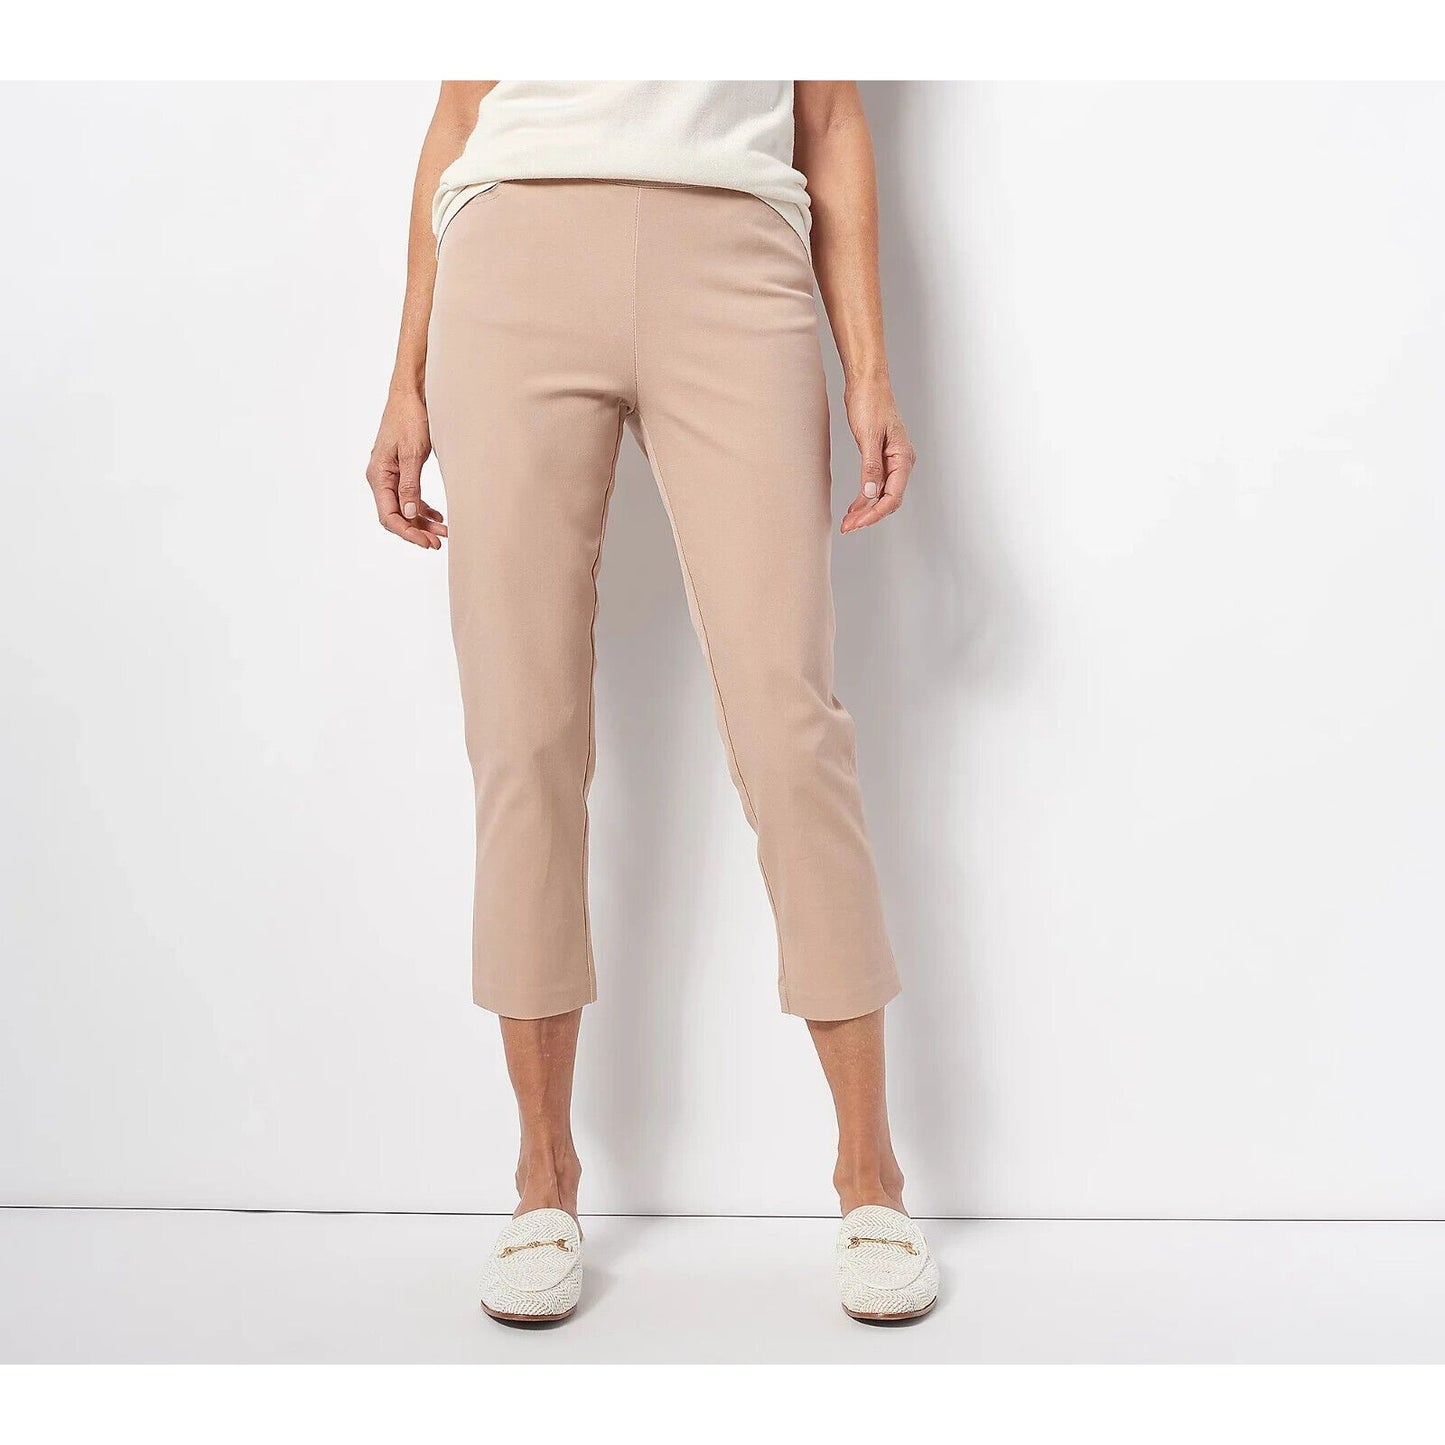 Isaac Mizrahi Regular 24/7 Stretch Crop Pants w/Pockets White Plus Petite 20WP